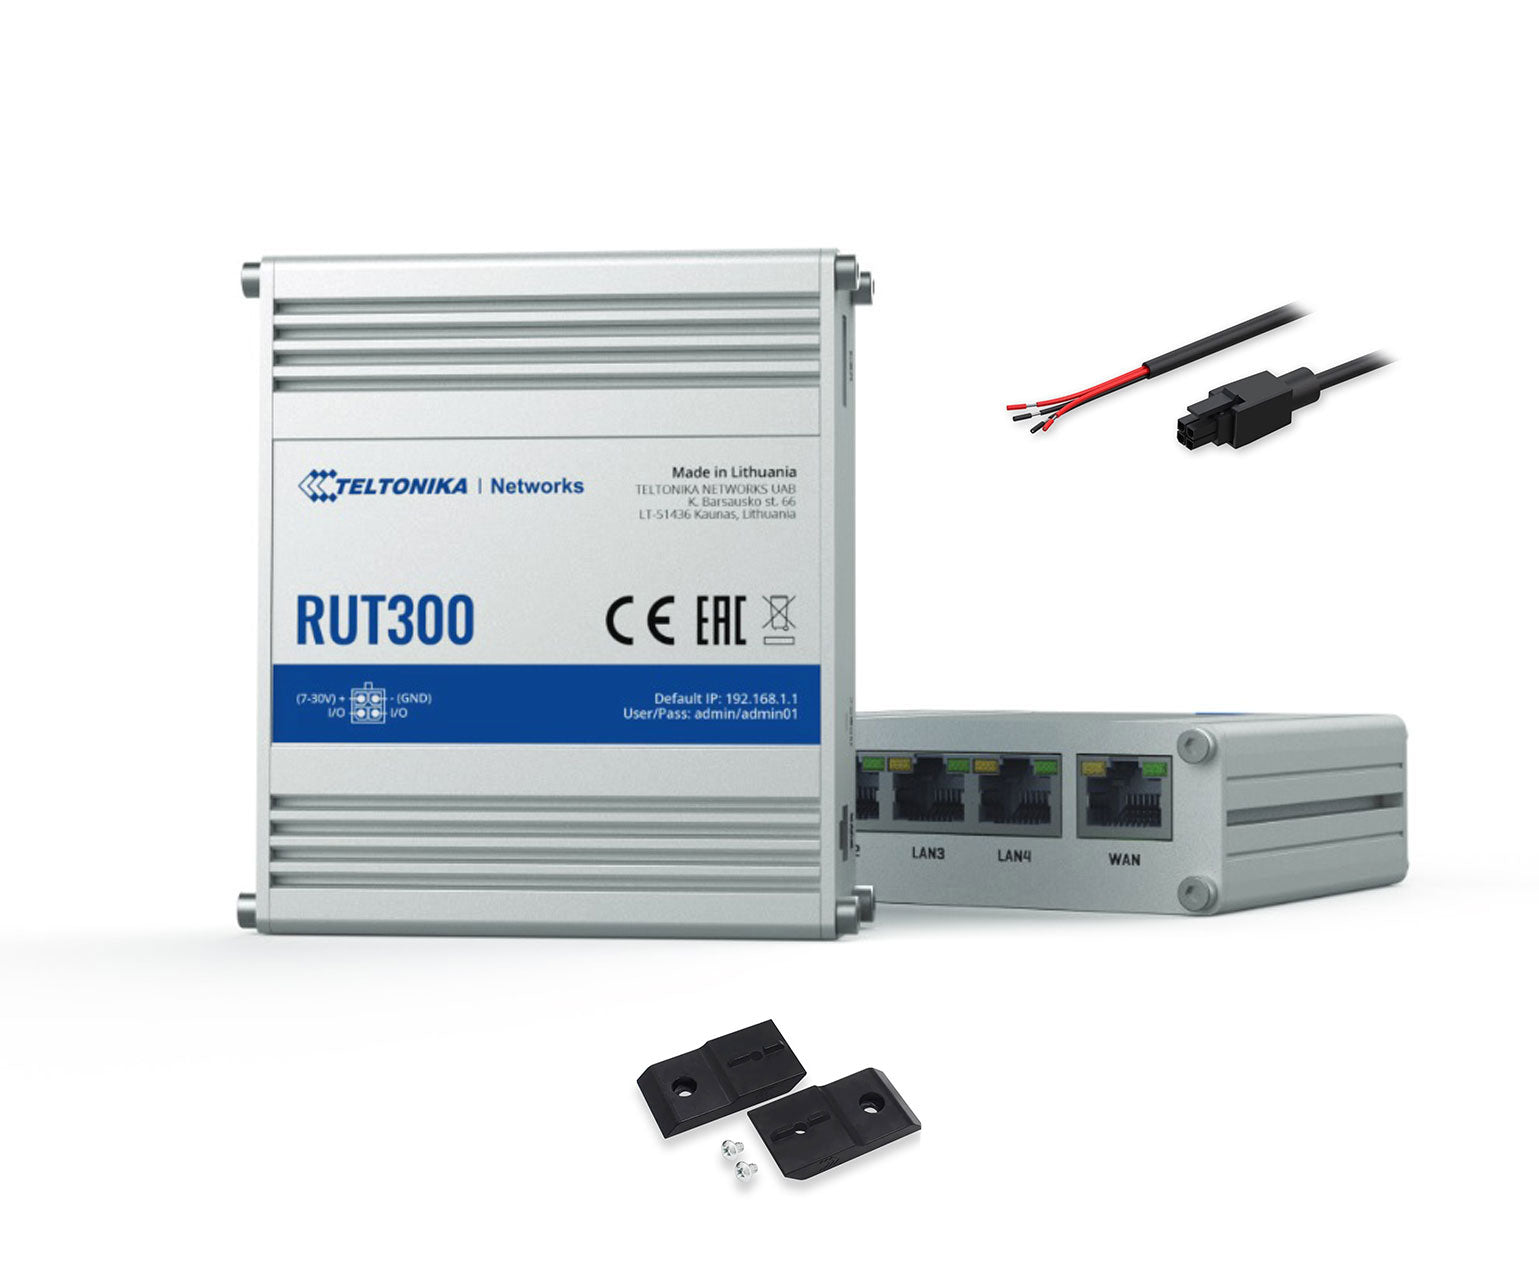 Teltonika RUT300000100 - RUT300 Industrial Ethernet Router, US Power Supply, 5 RJ45, USB